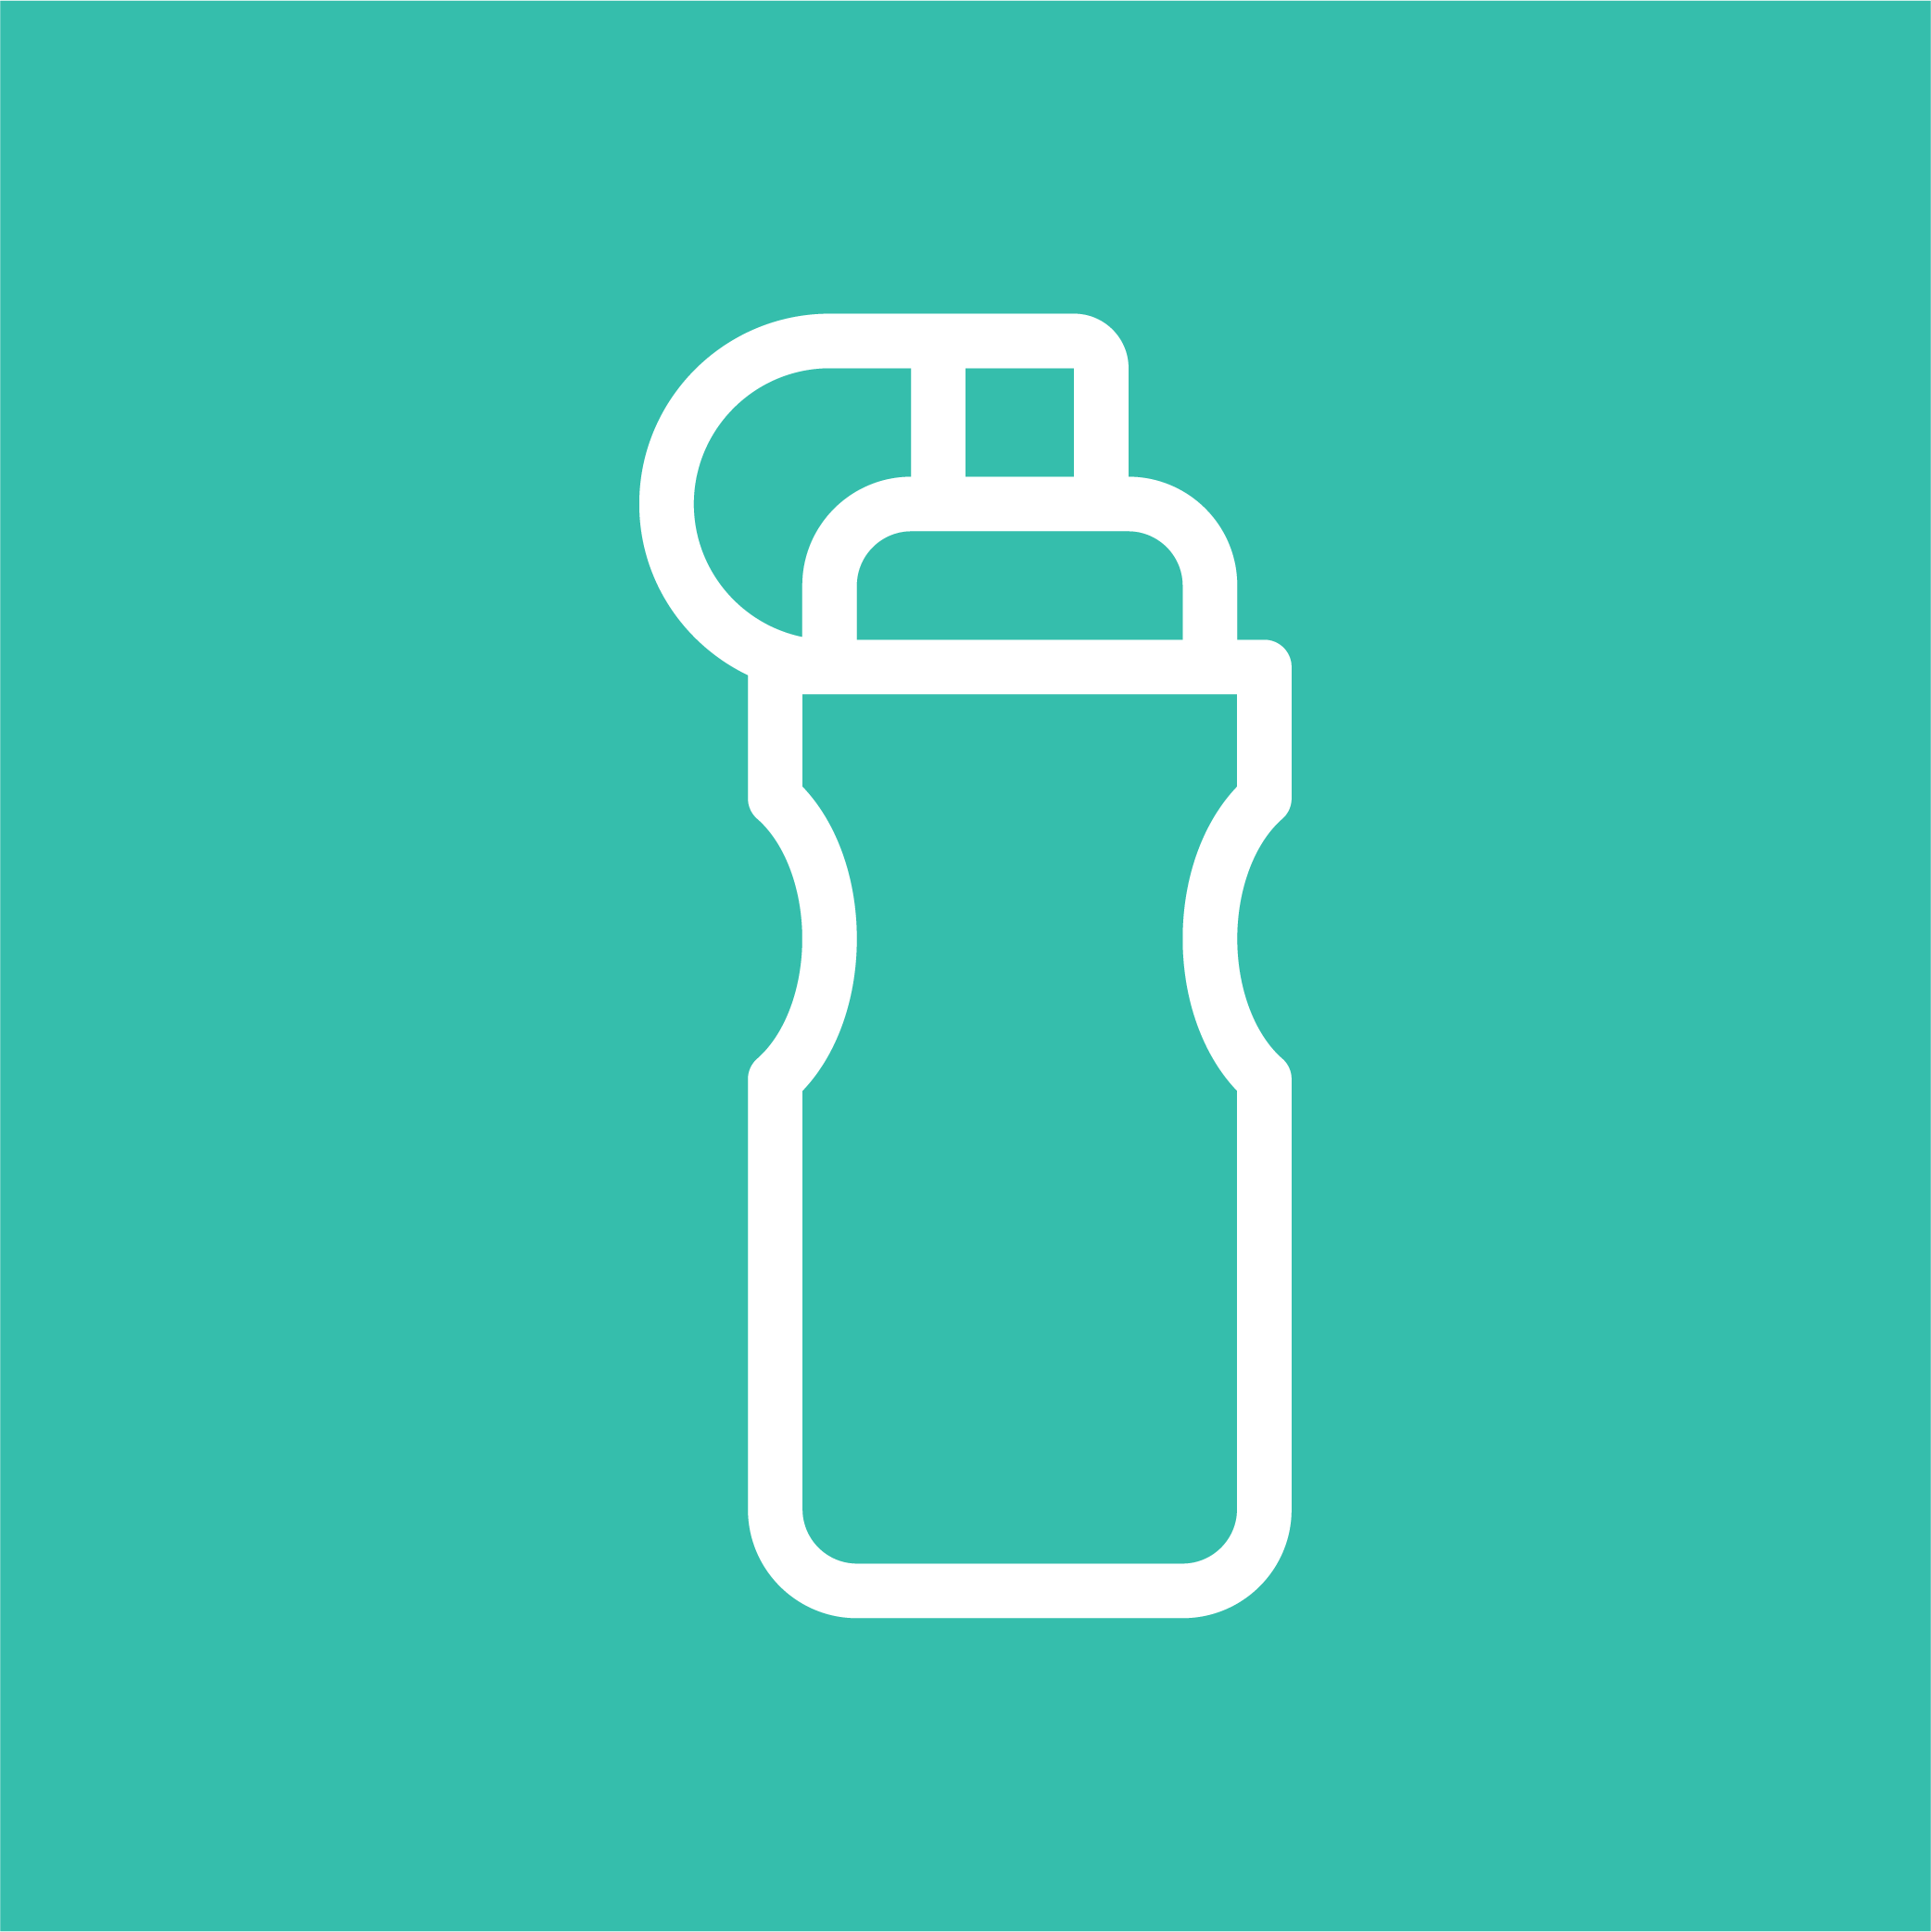 White drink bottle icon with aqua background